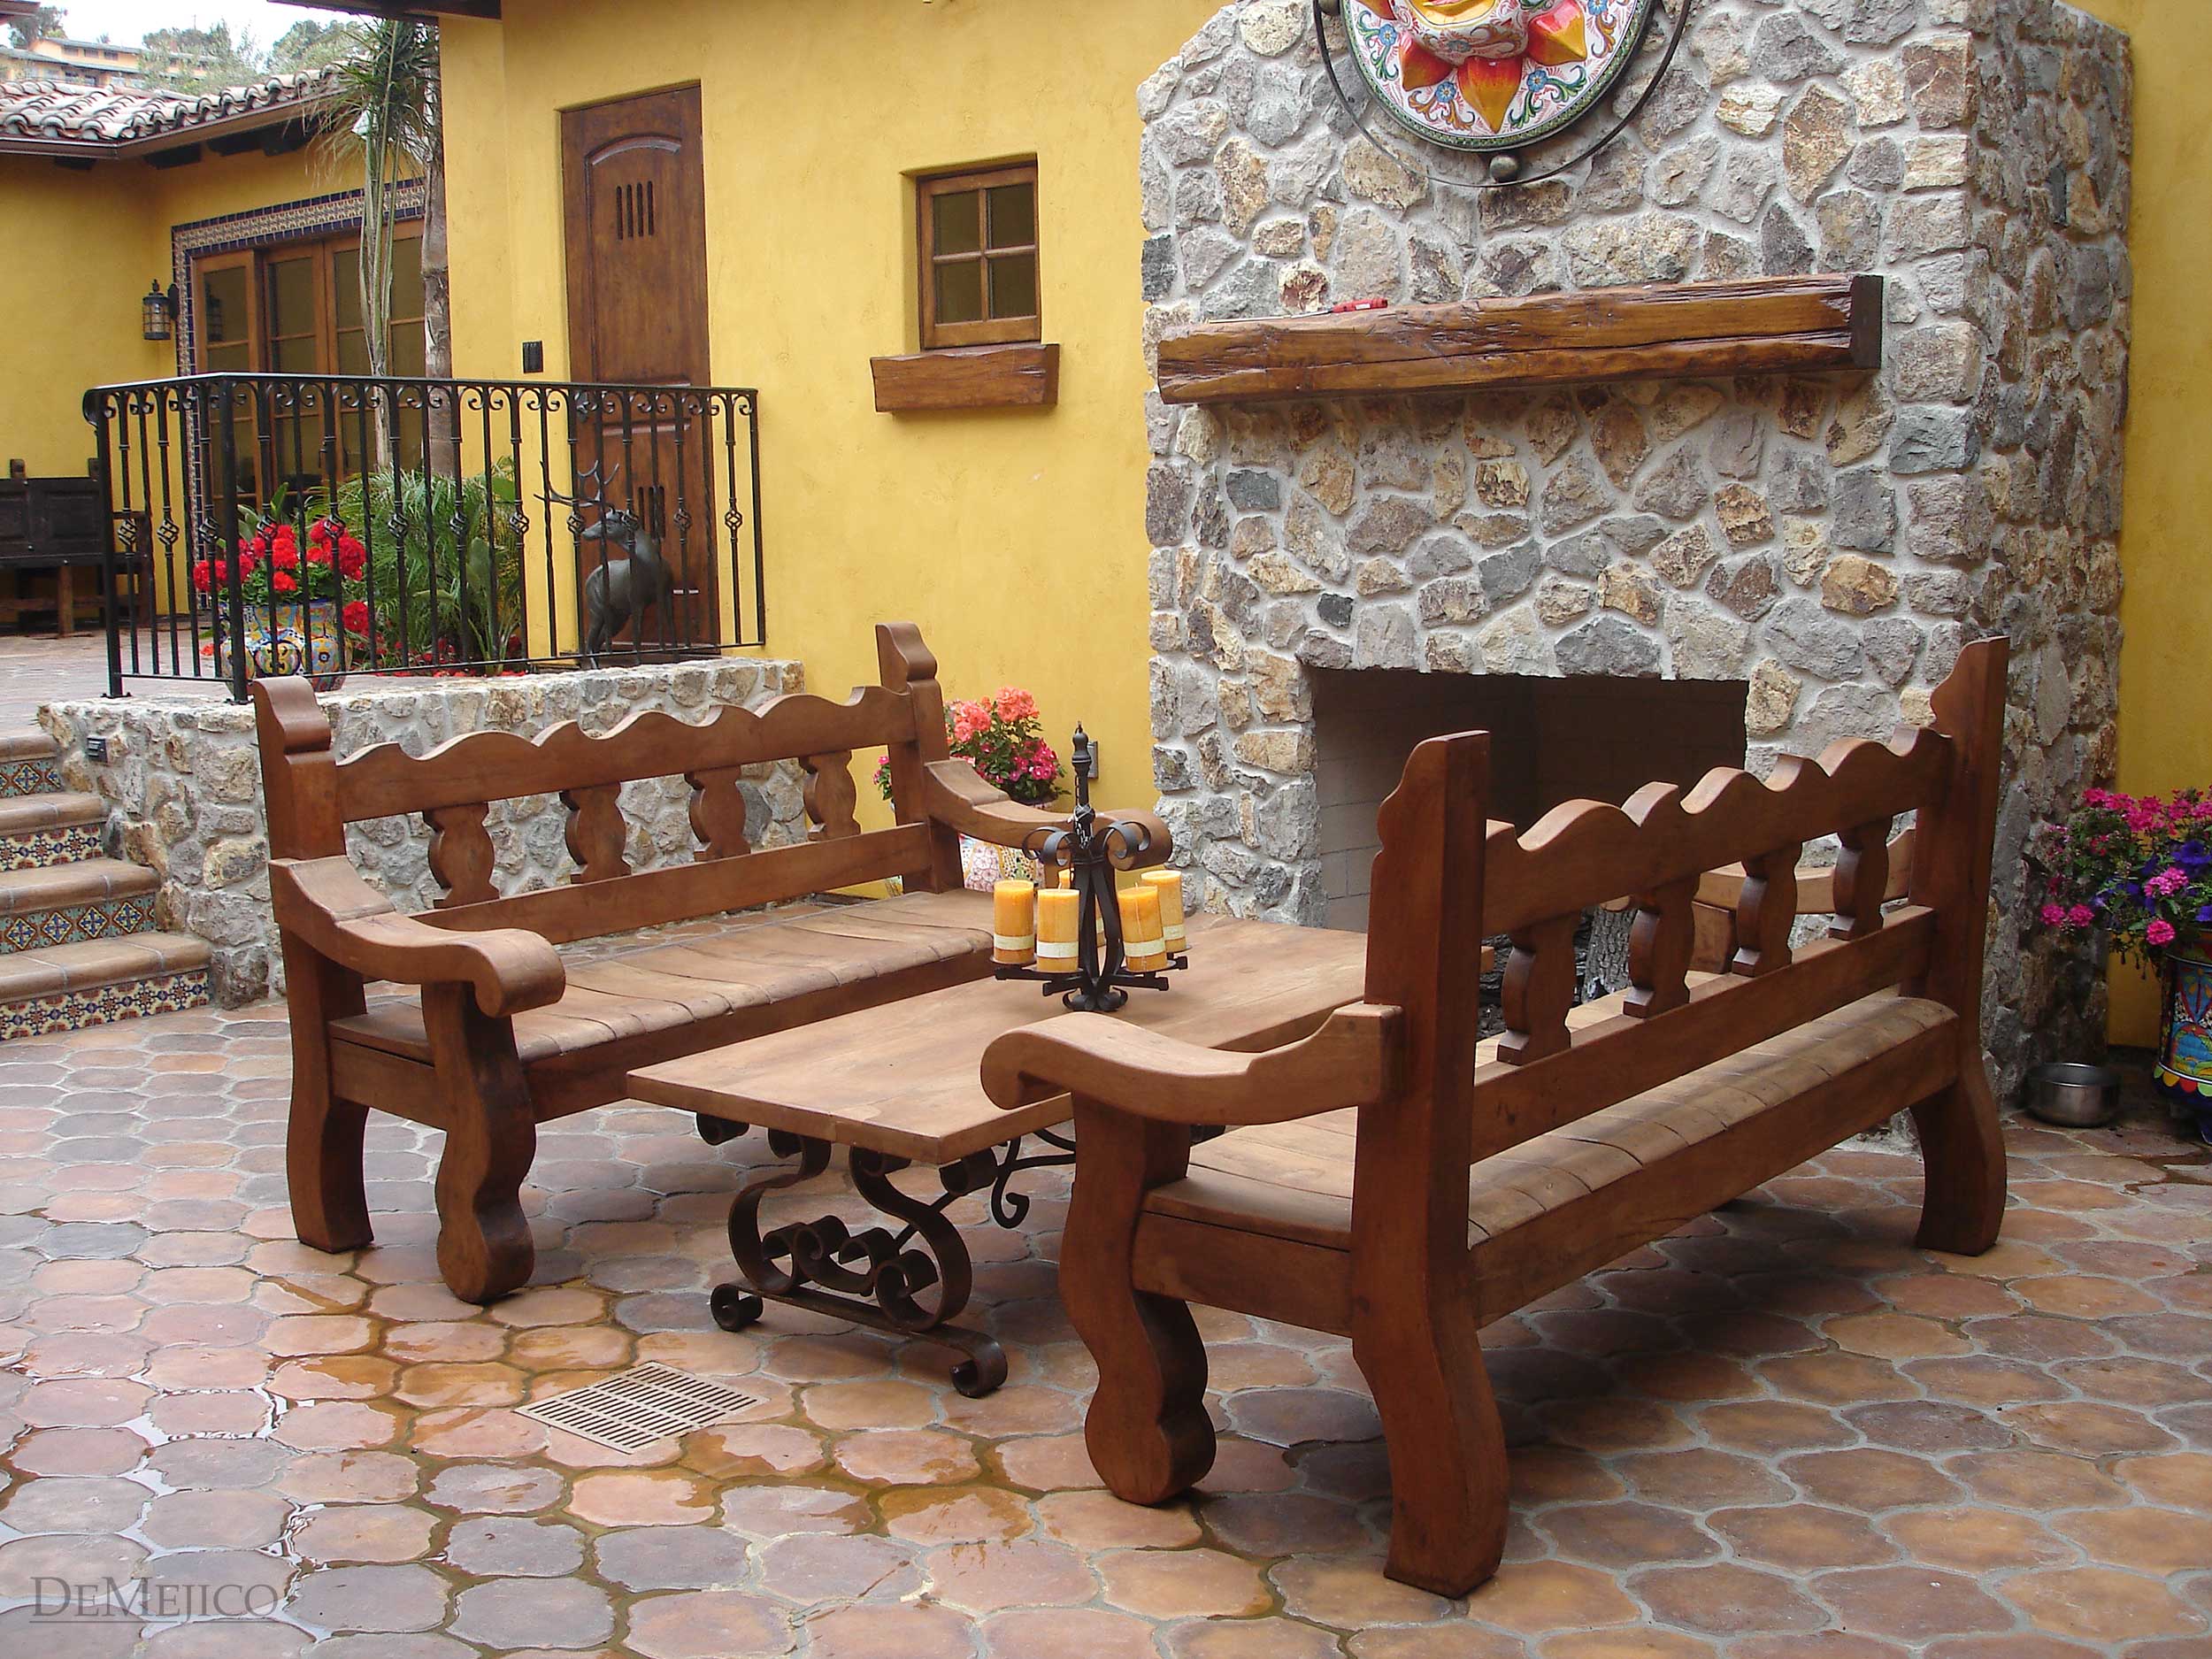 Spanish Furniture, Spanish Outdoor Furniture - Demejico